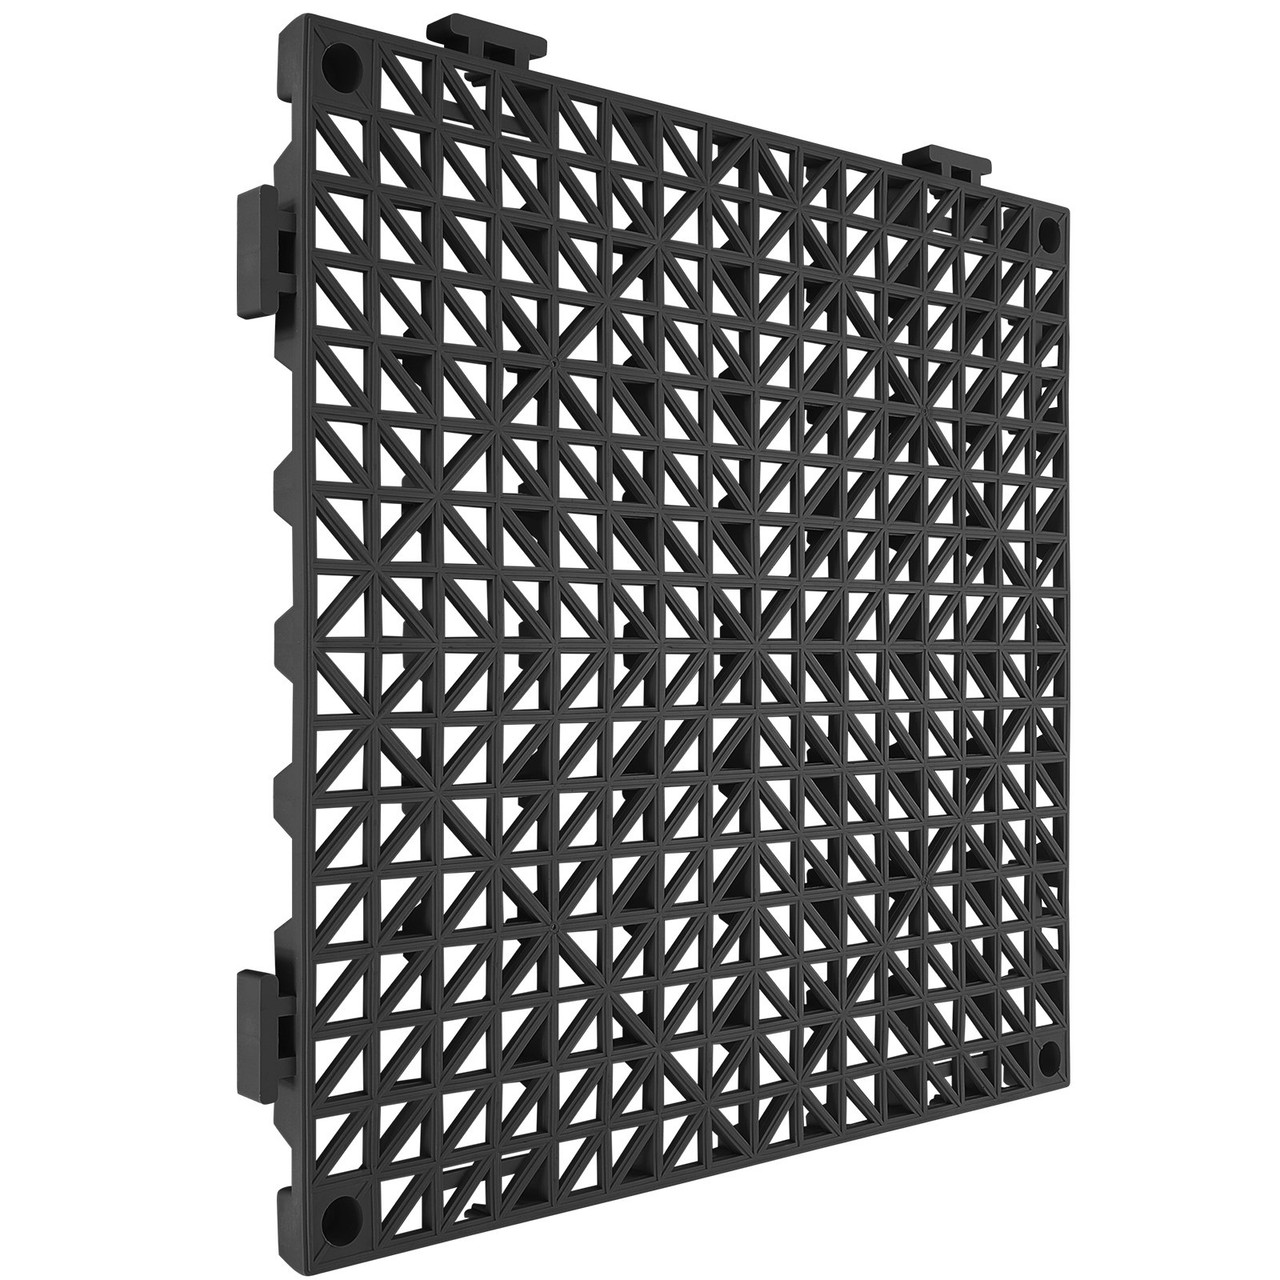 VEVOR Interlocking Tile 50PCS Black, Drainage Tiles 12" x 12" Splicing, Soft PVC Interlocking Drainage Floor Tiles, Non-Slip Drainage Holes for Restroom, Bathroom, Kitchen, Pool, Wet Areas